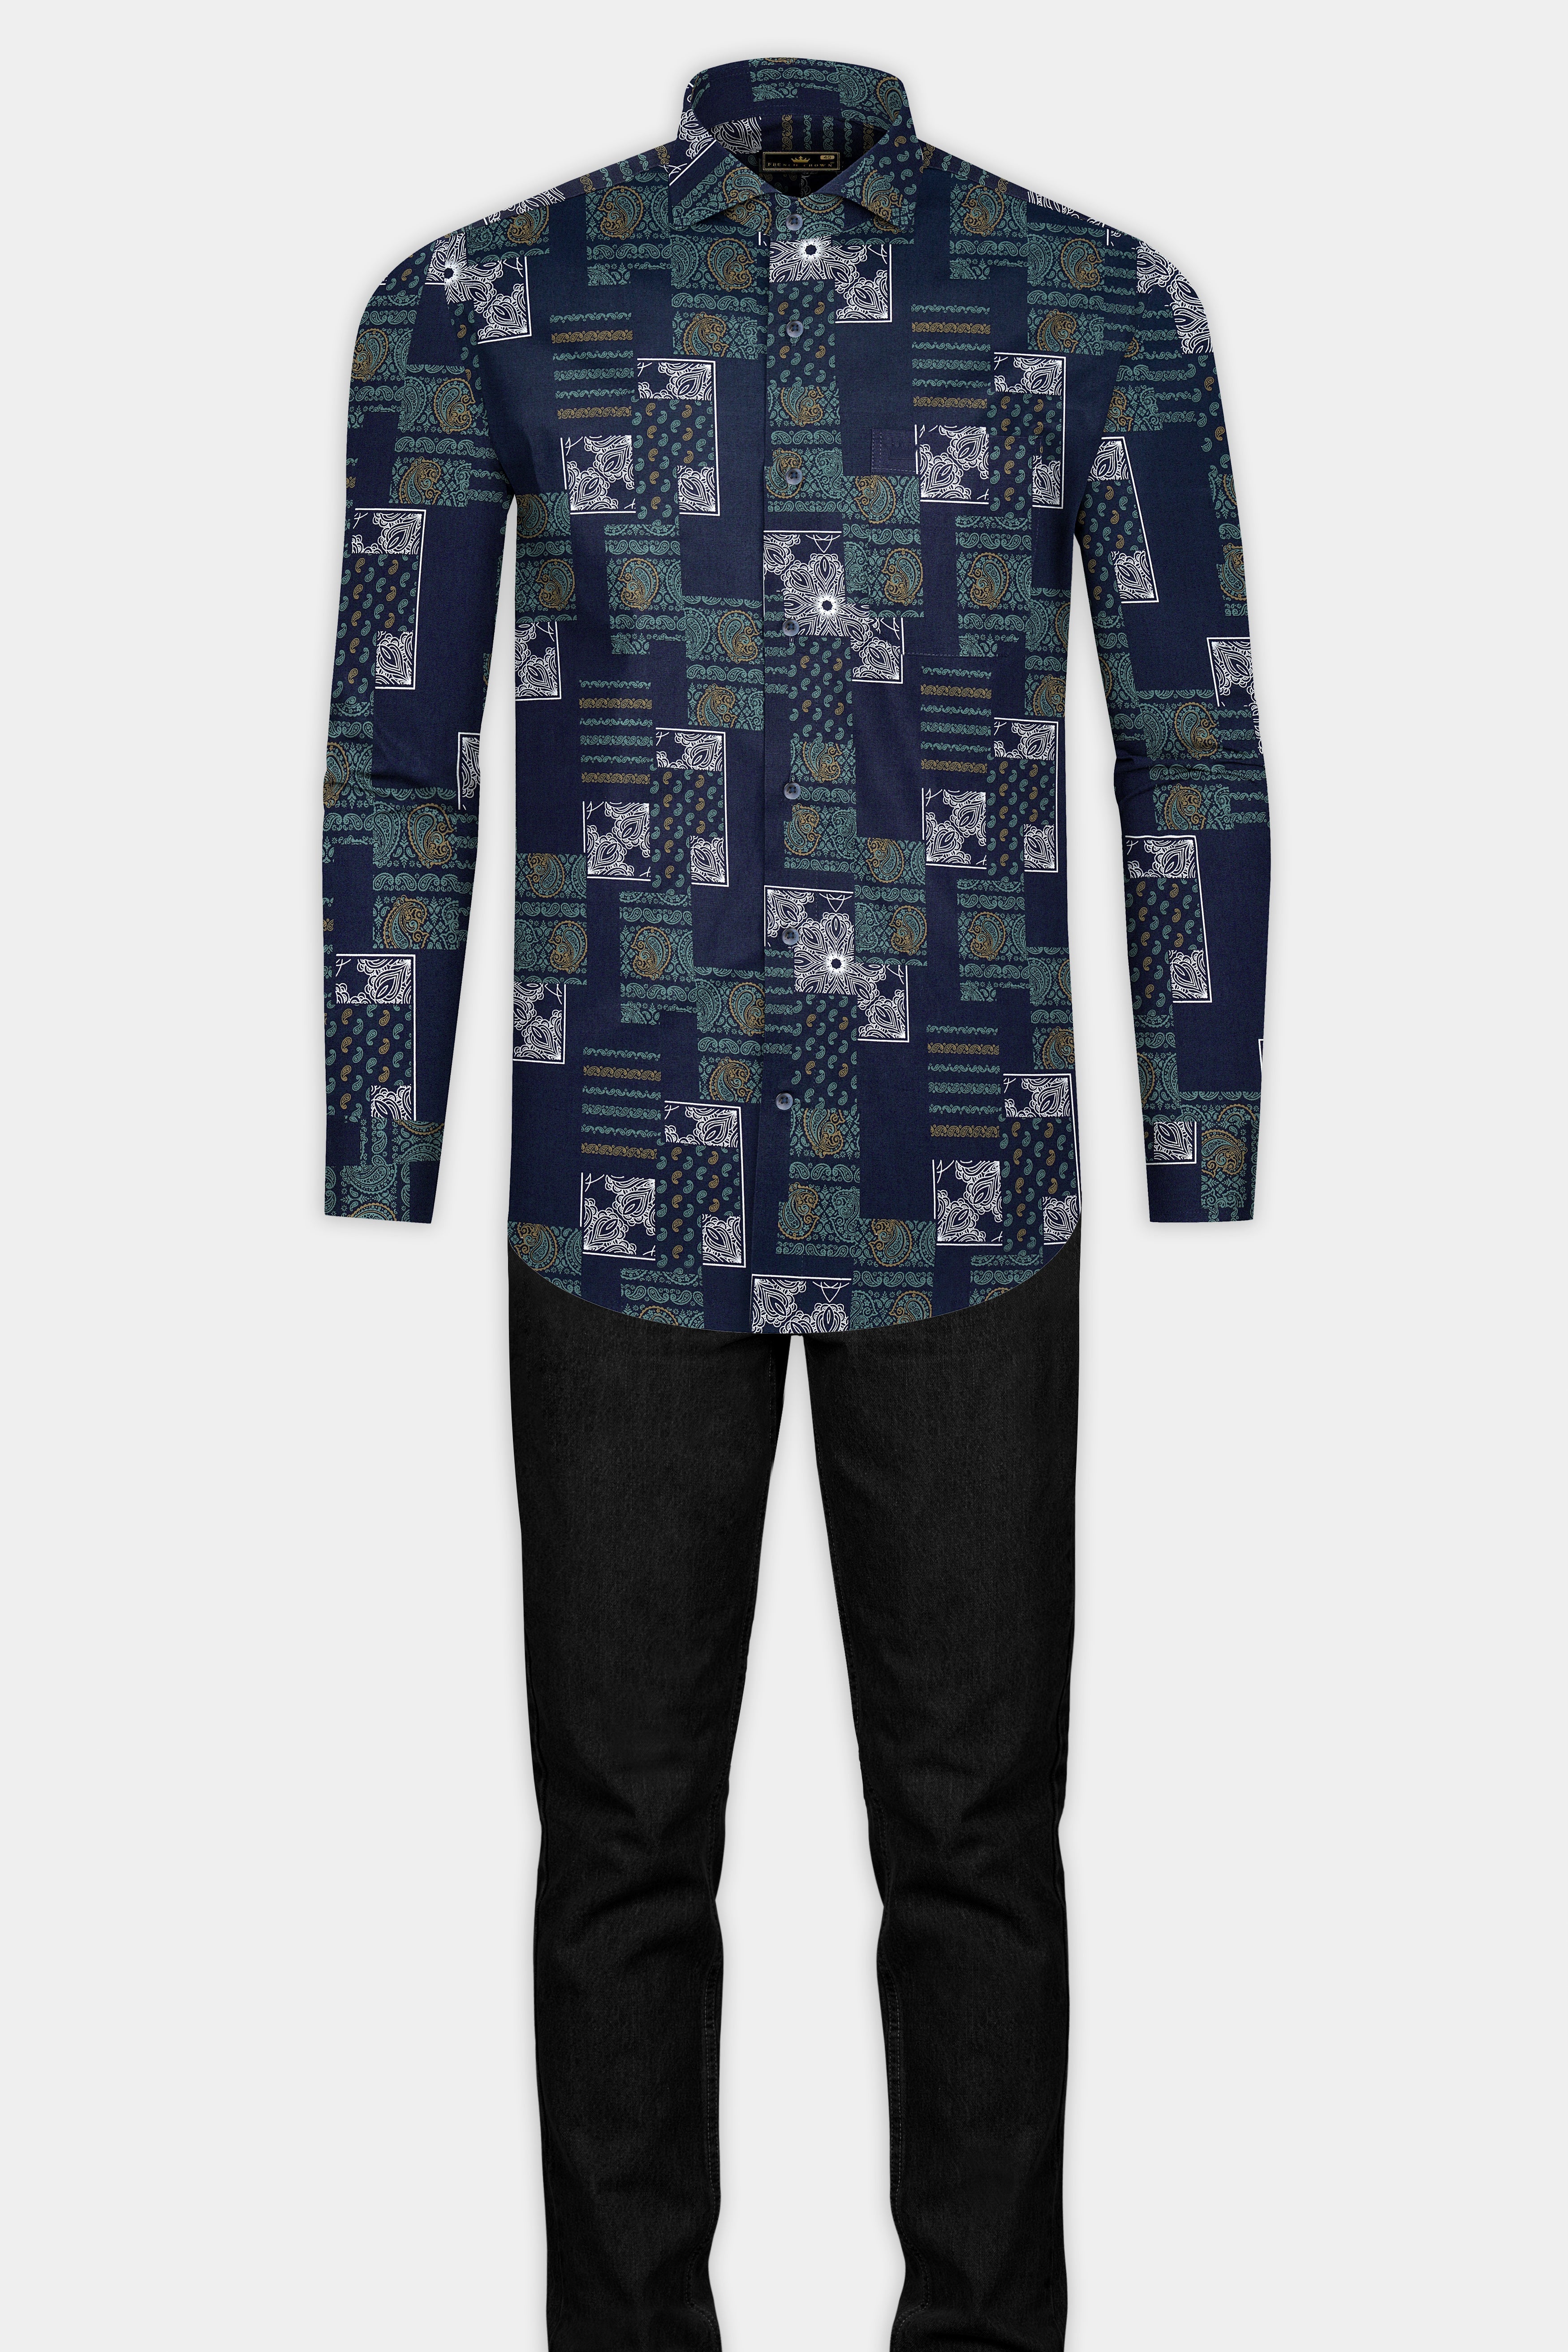 Tealish Blue Multicolour Design Printed Super Soft Premium Cotton Shirt